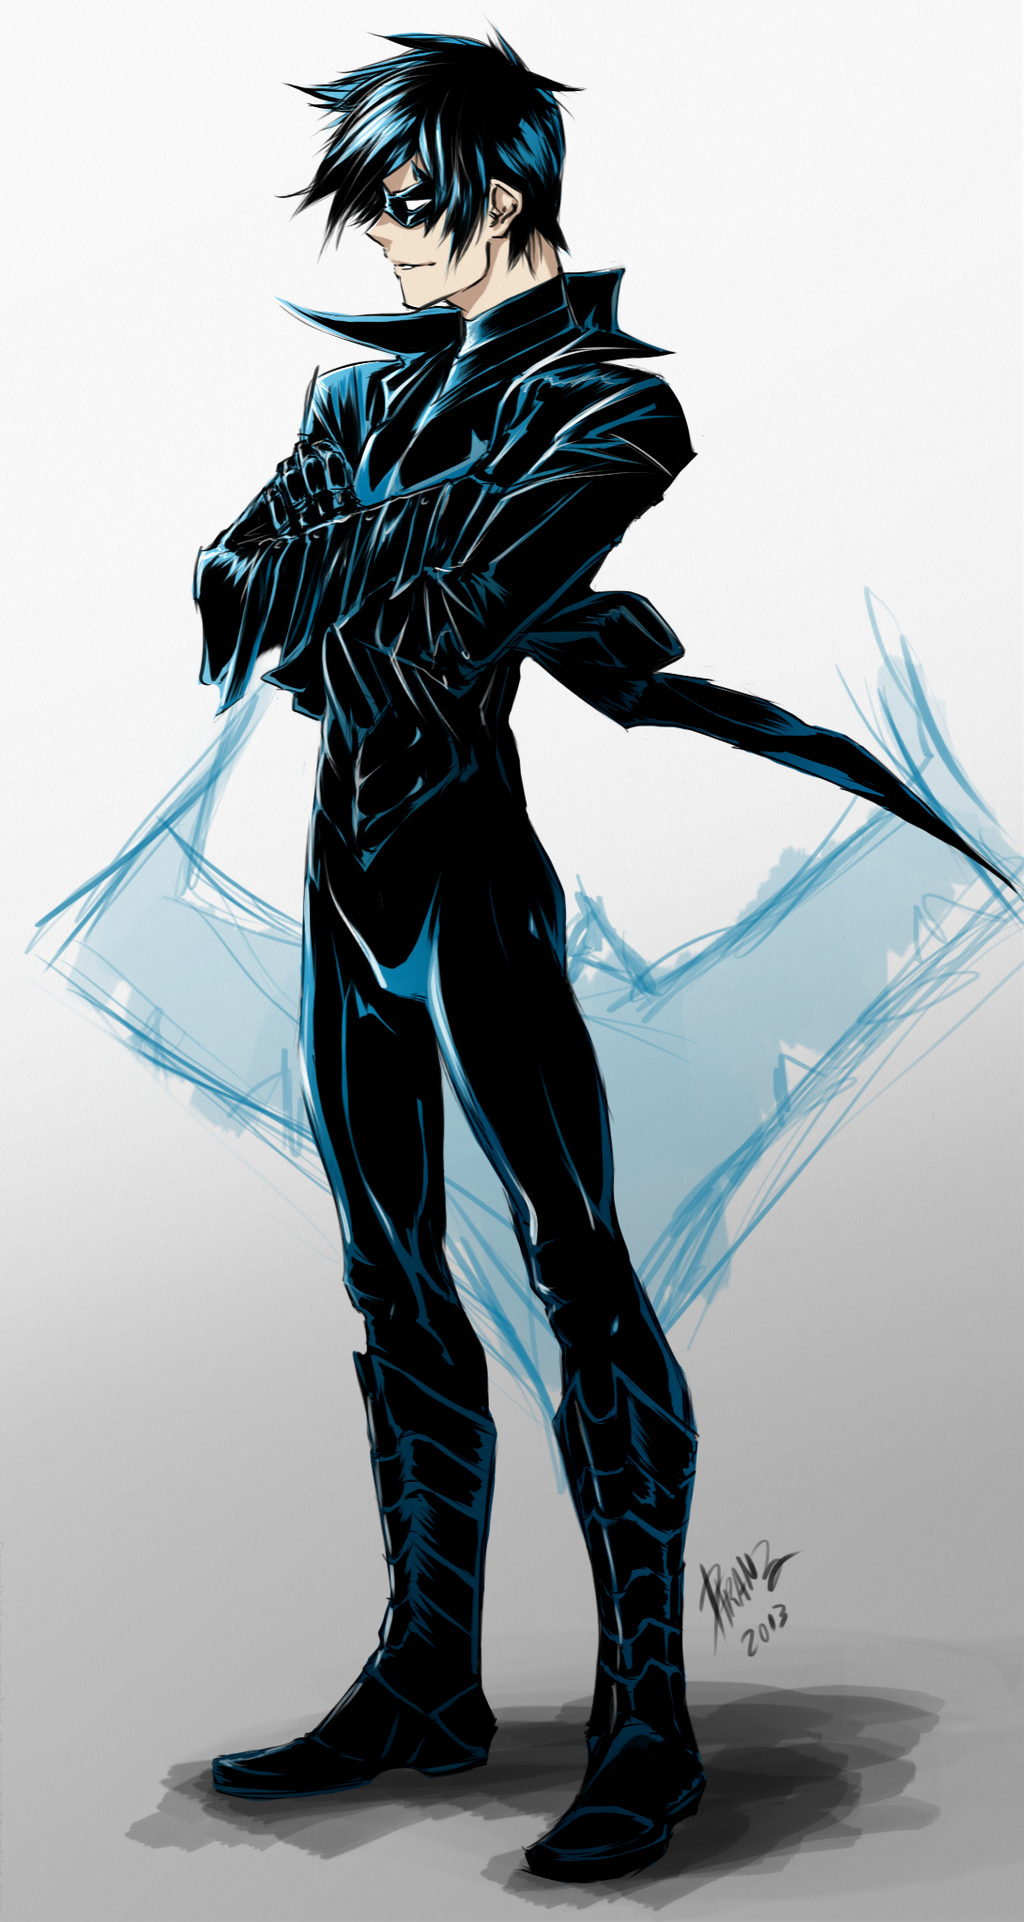 Nightwing #8